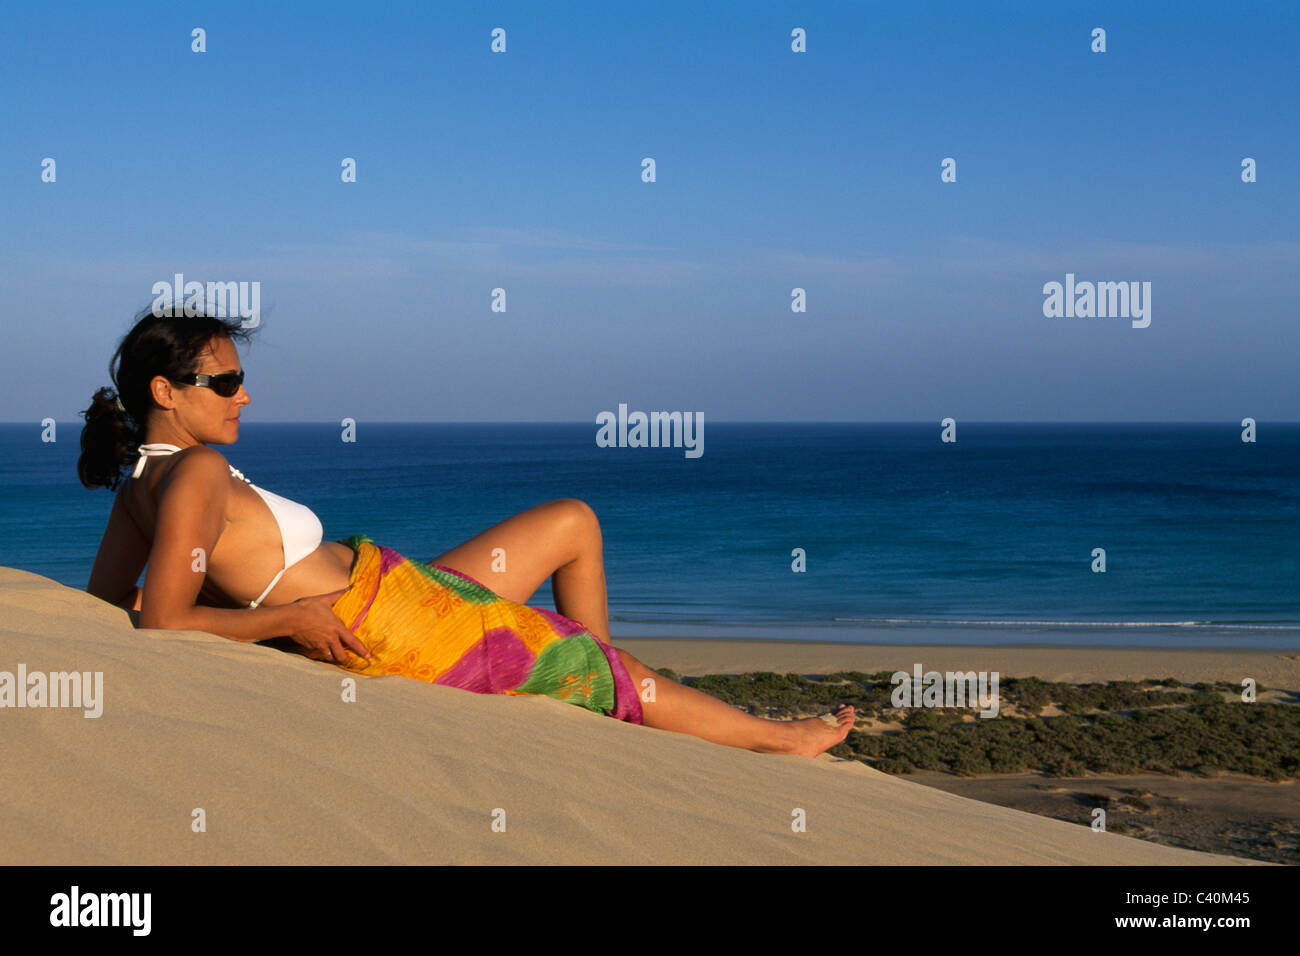 model released, dunes, Risco del Paso, Fuerteventura, Canary islands, isles, Spain, woman, sand Stock Photo